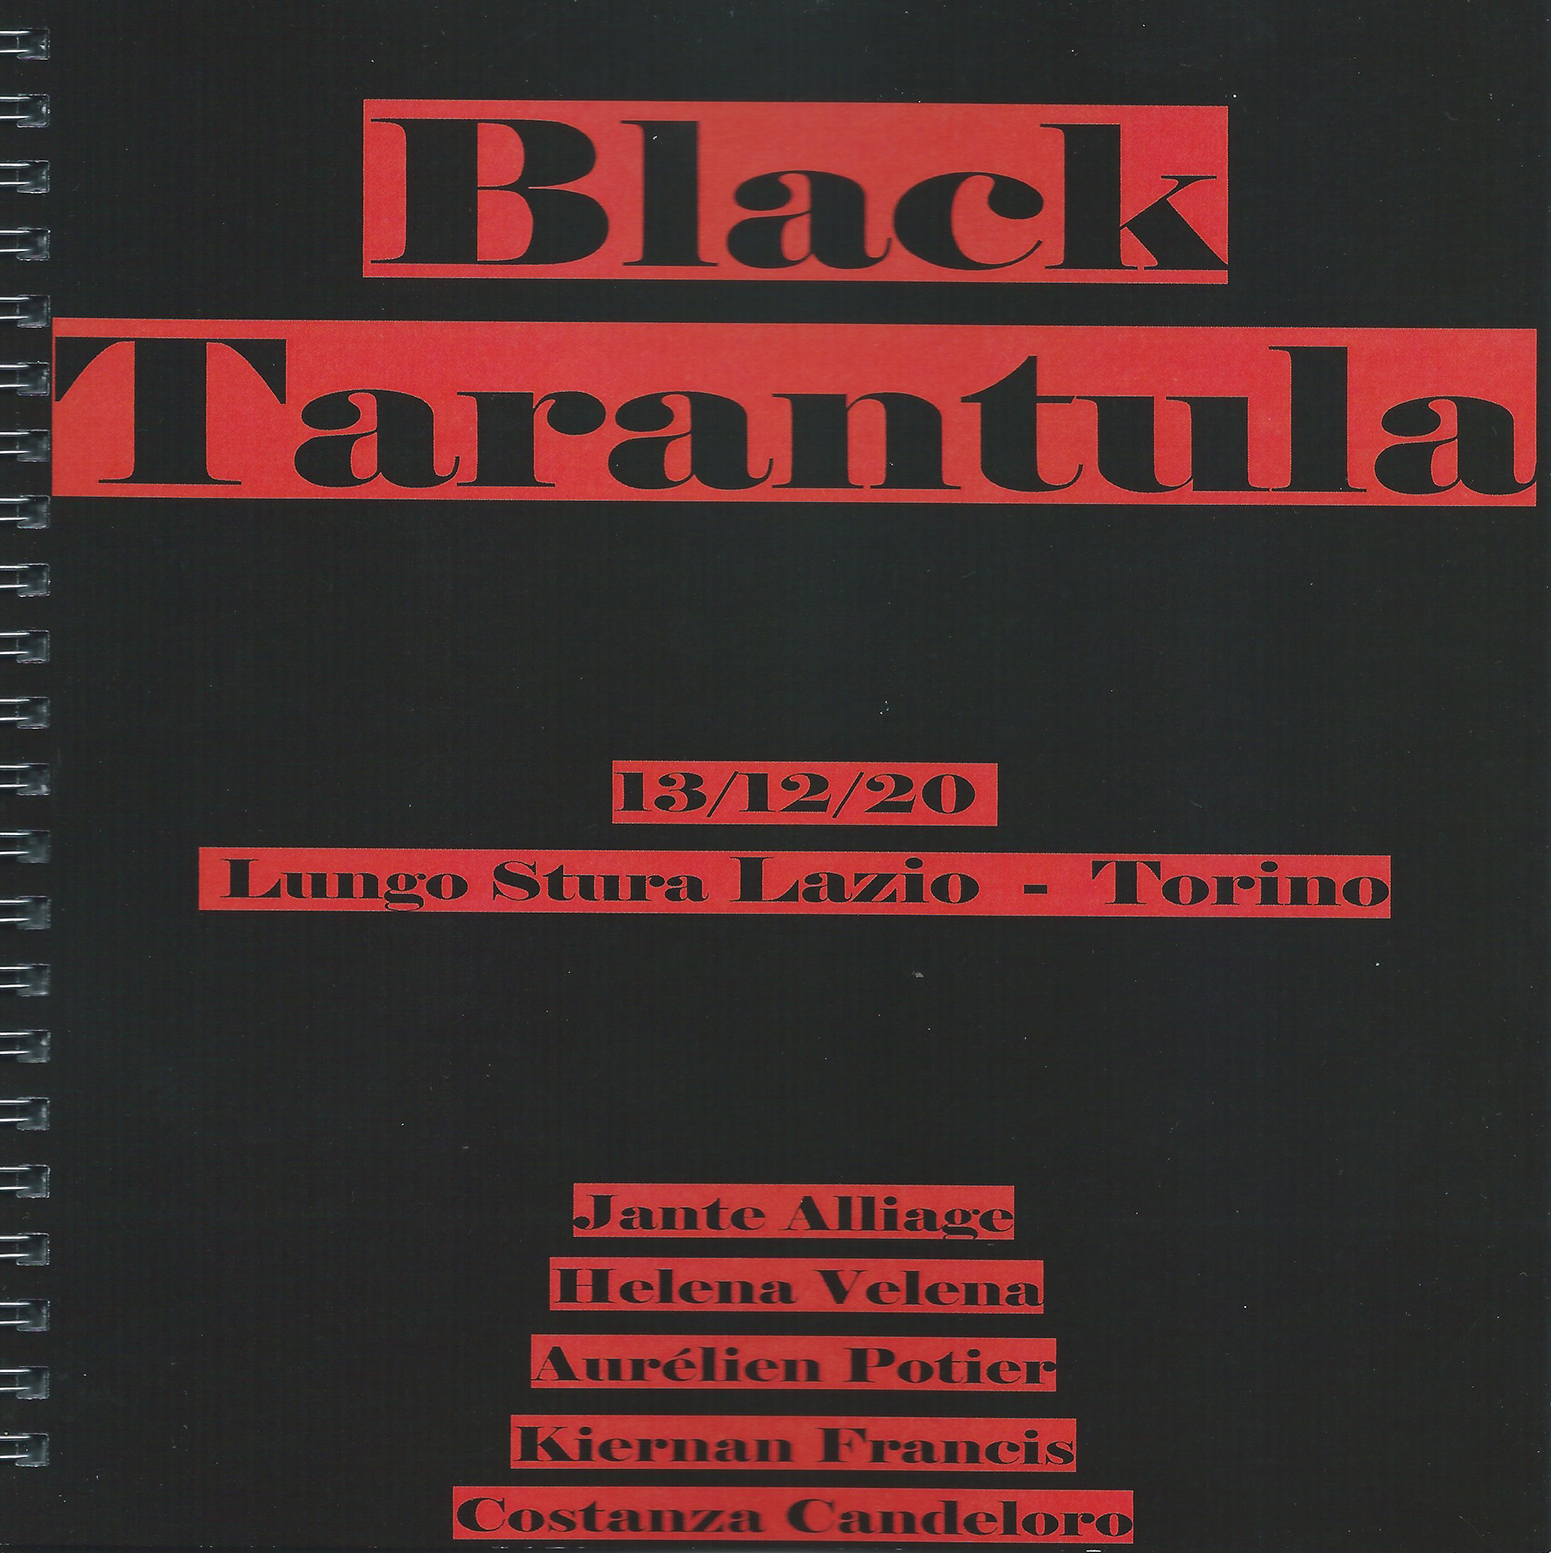 mrzb-Black Tarantula-Helena Velena-Aure´lien Potier-Costanza Candeloro-Jante Alliage-Kiernan Francis-at-Lungo-Stura-Lazio-Torino